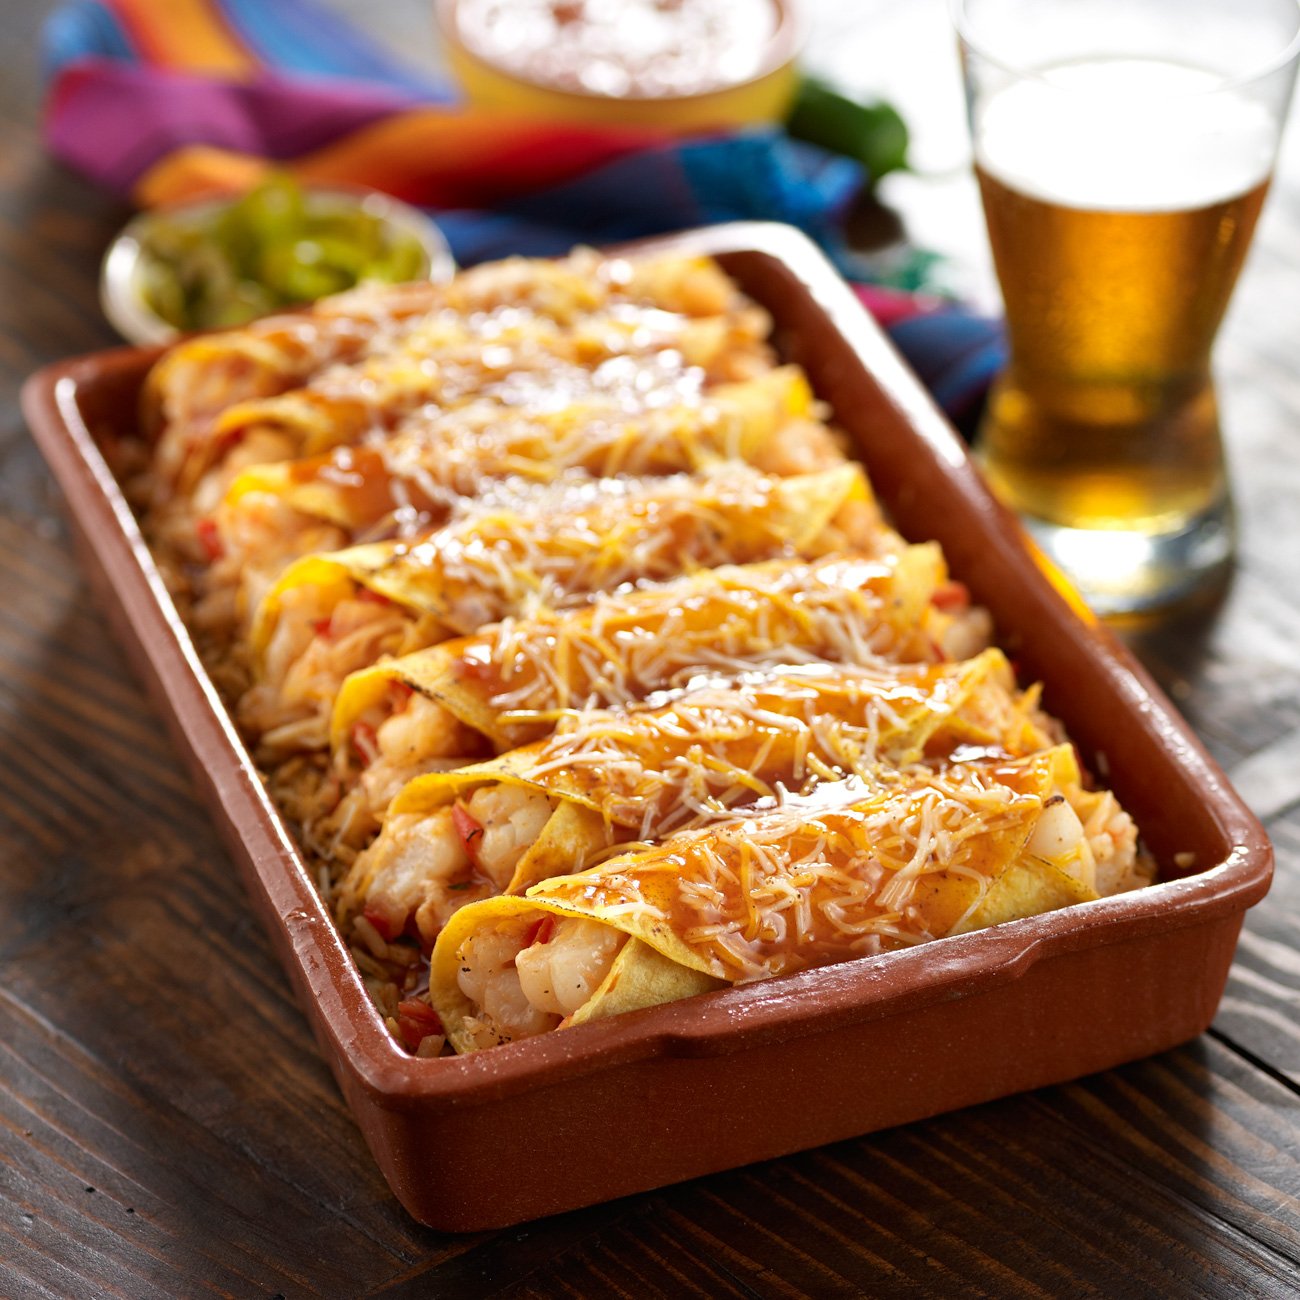 https://images.heb.com/is/image/HEBGrocery/recipe-hm-large/healthy-shrimp-enchiladas-recipe.jpg